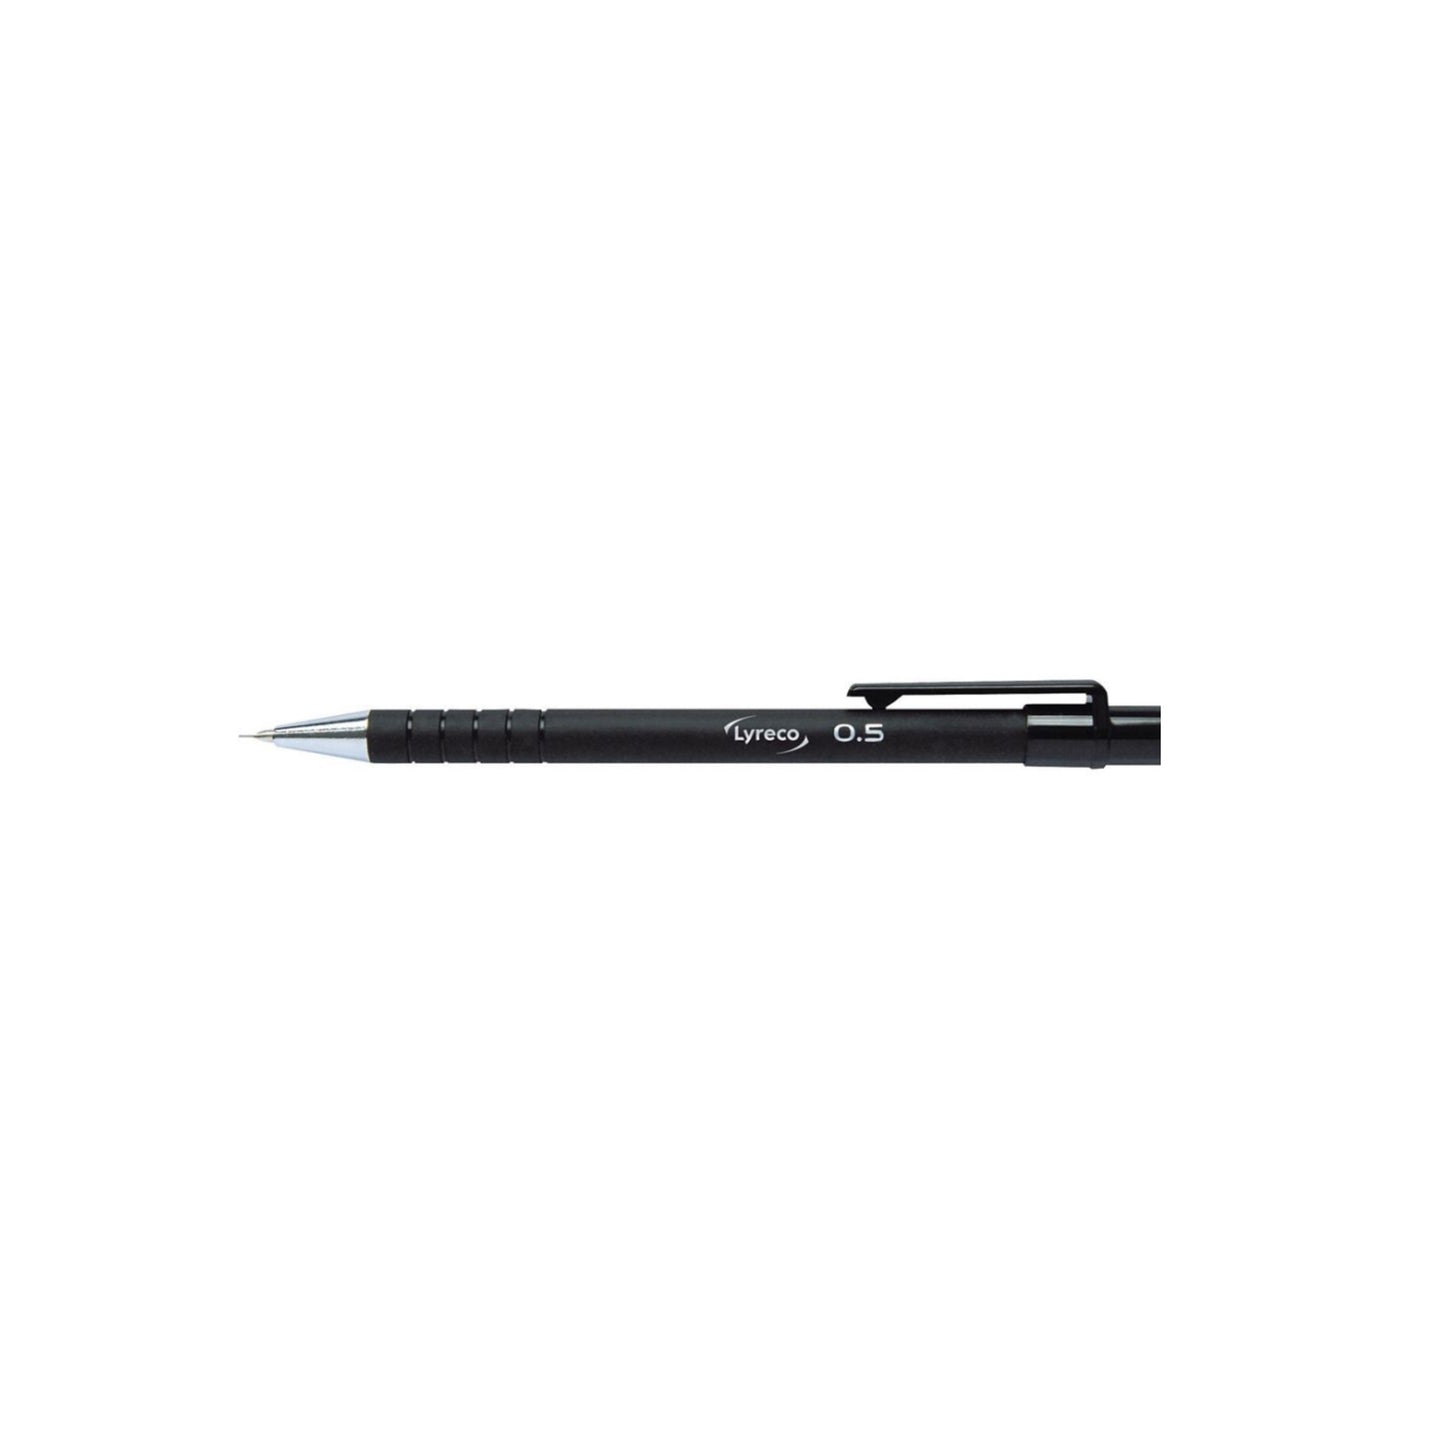 Lyreco 0.5 Mechanical Pencil